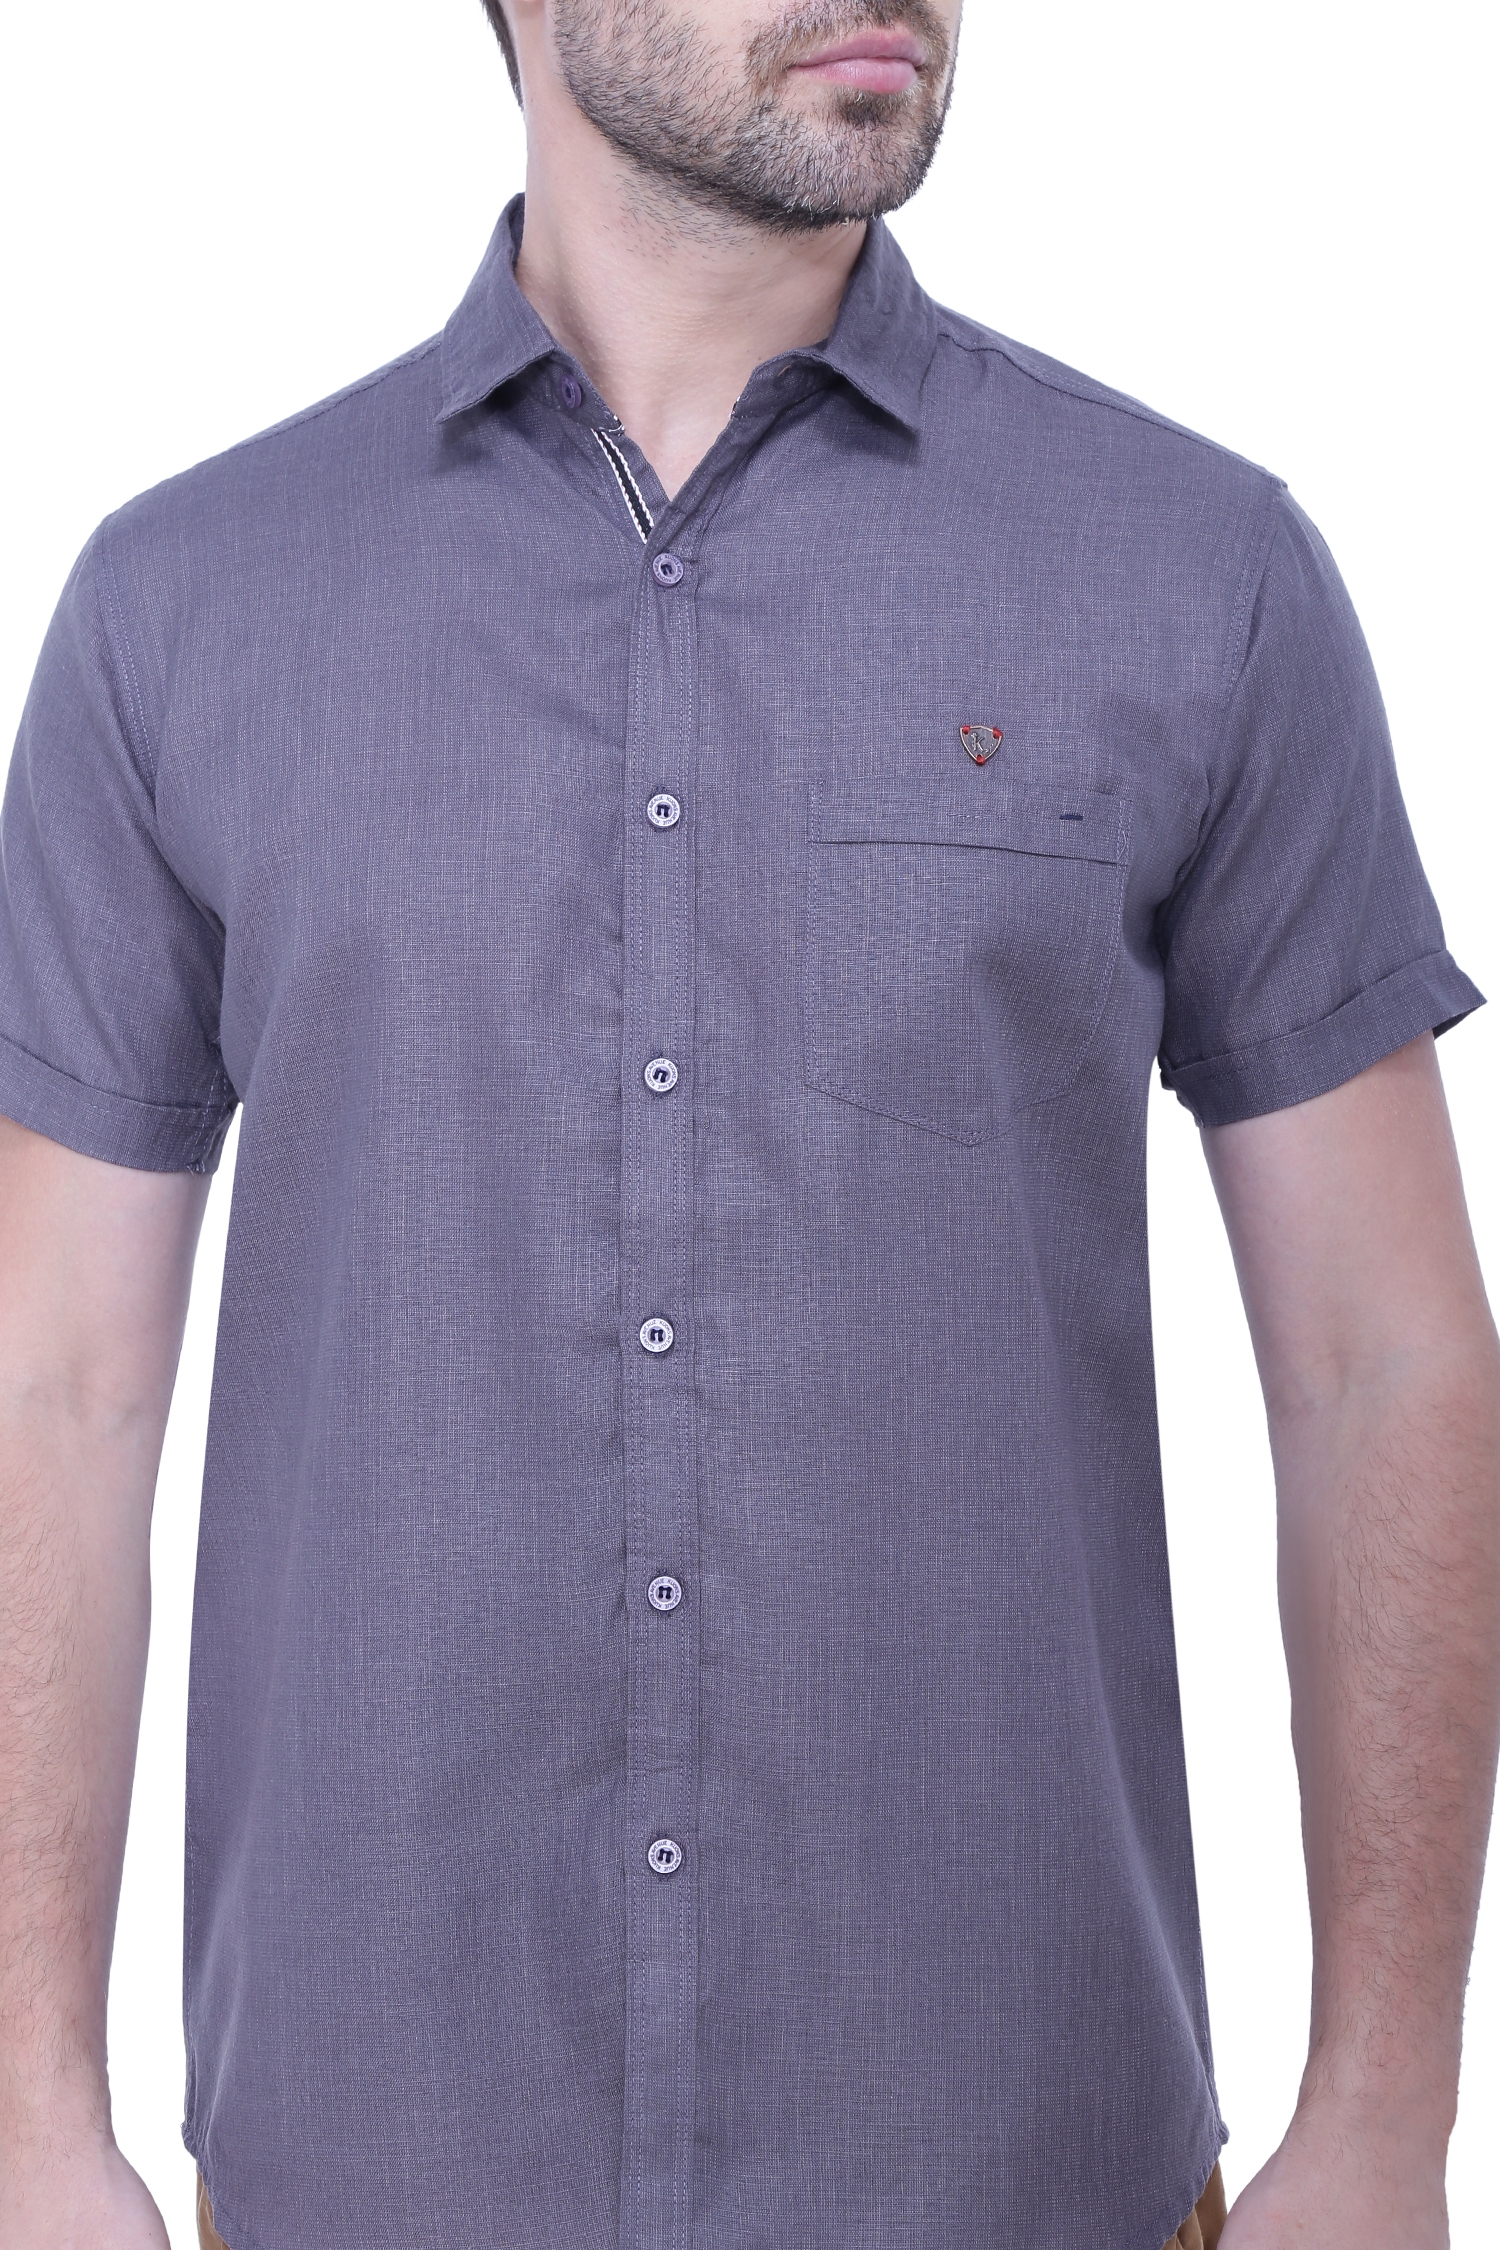 Kuons Avenue | Kuons Avenue Men's Linen Blend Half Sleeves Casual Shirt-KACLHS1221 3